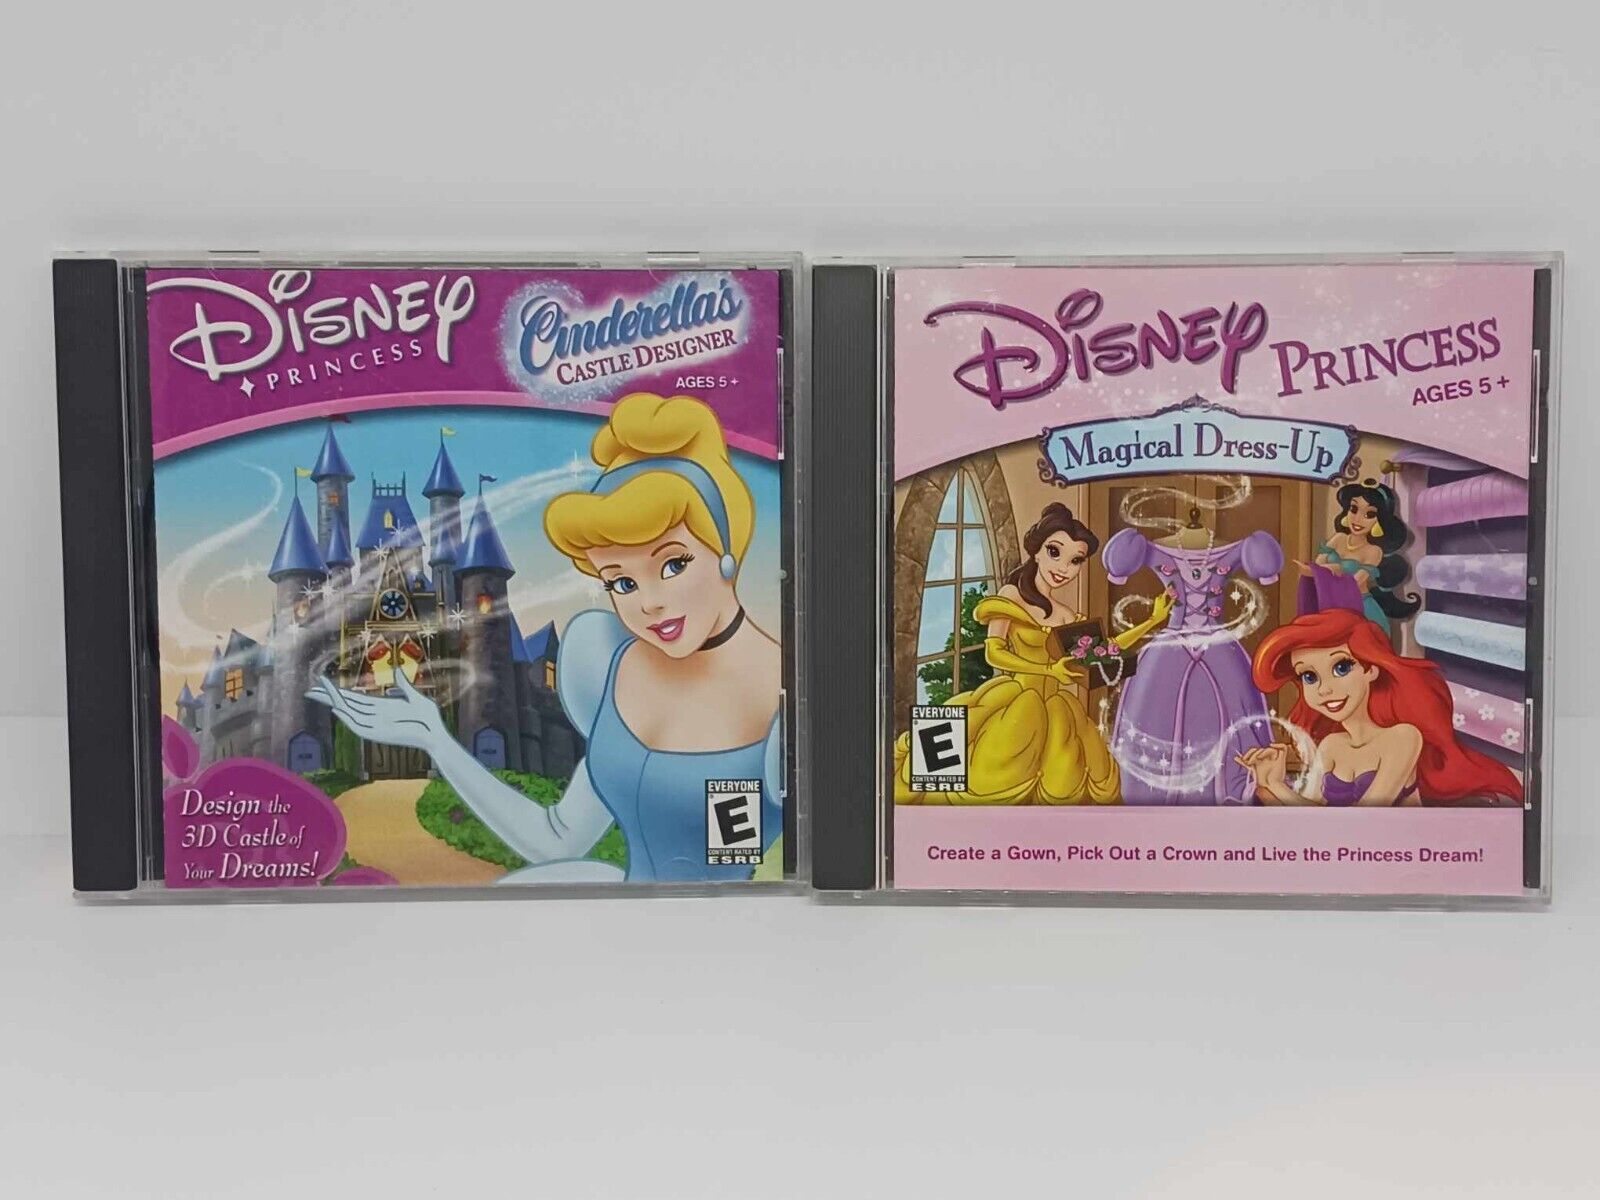 Disney Princess Magical Dress Up and Cinderella\'s Castle Designer CD Rom Bundle